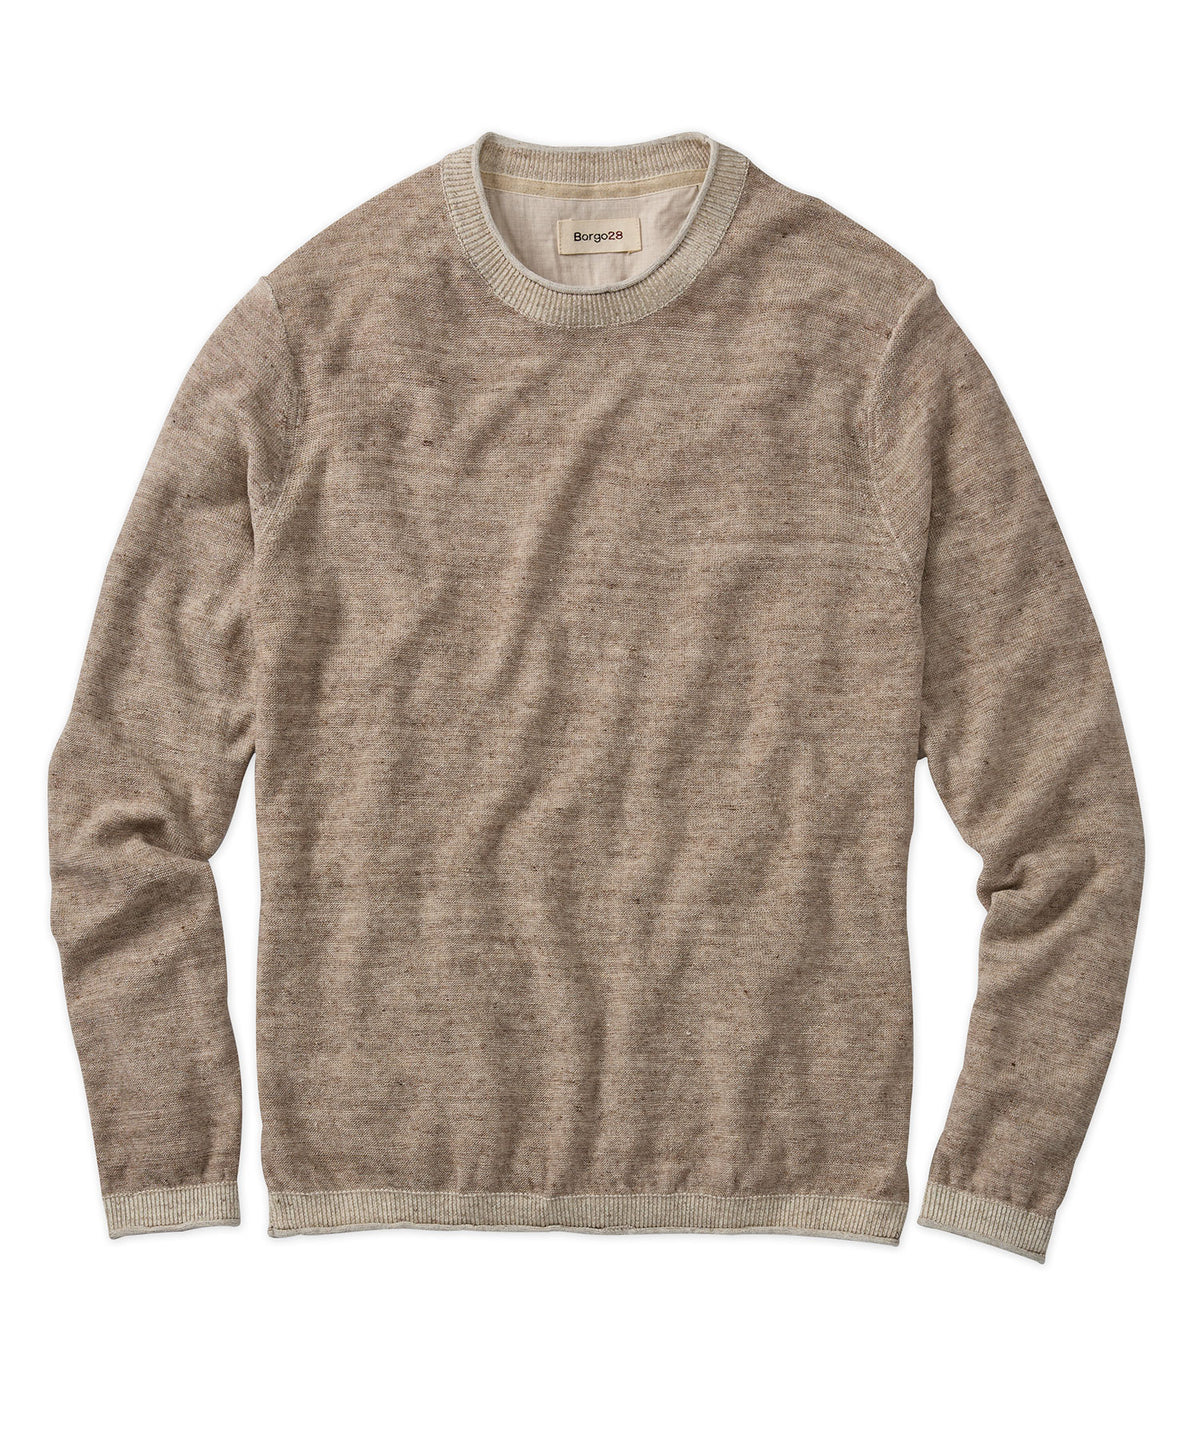 Cotton-Linen Crewneck Sweater